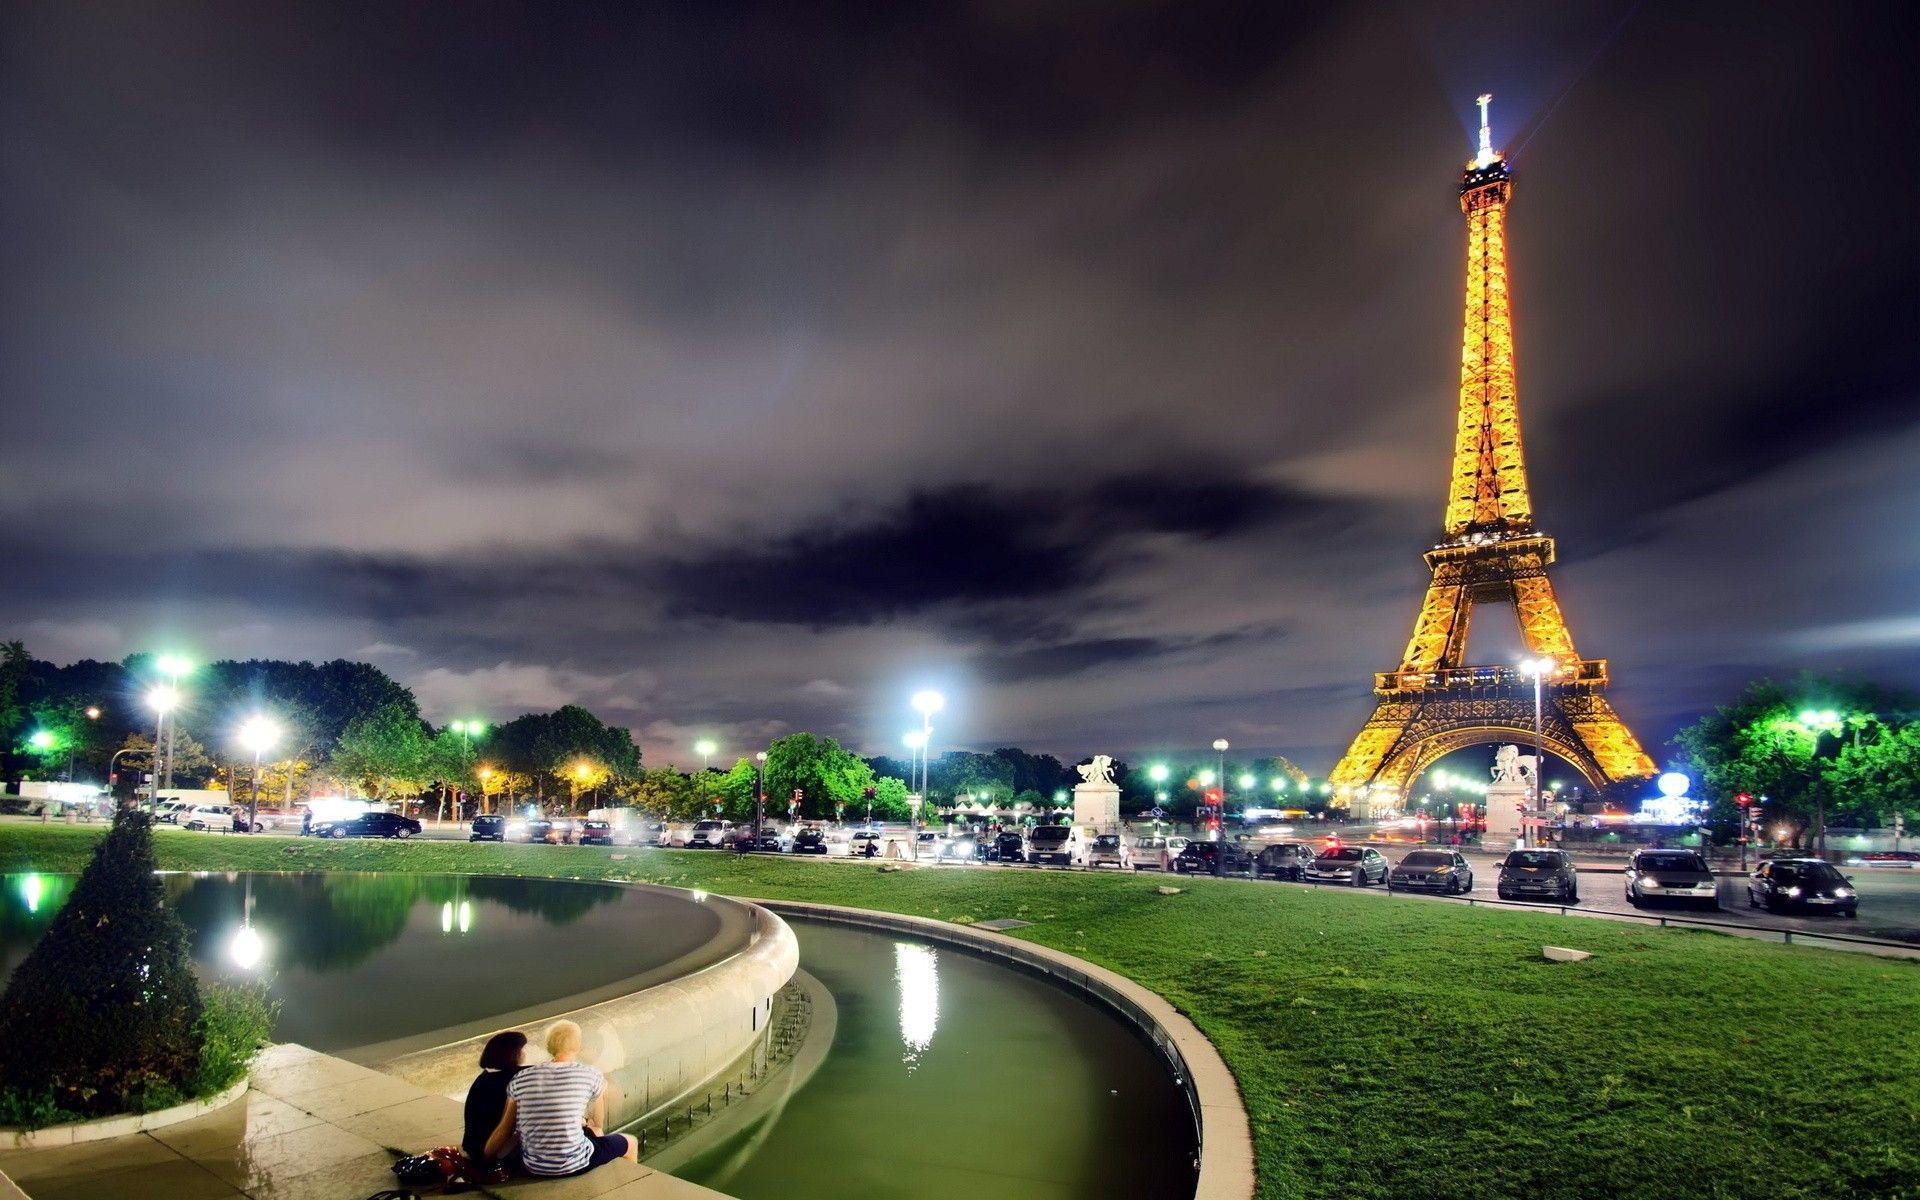 Eiffel Tower Wallpaper HD Picture